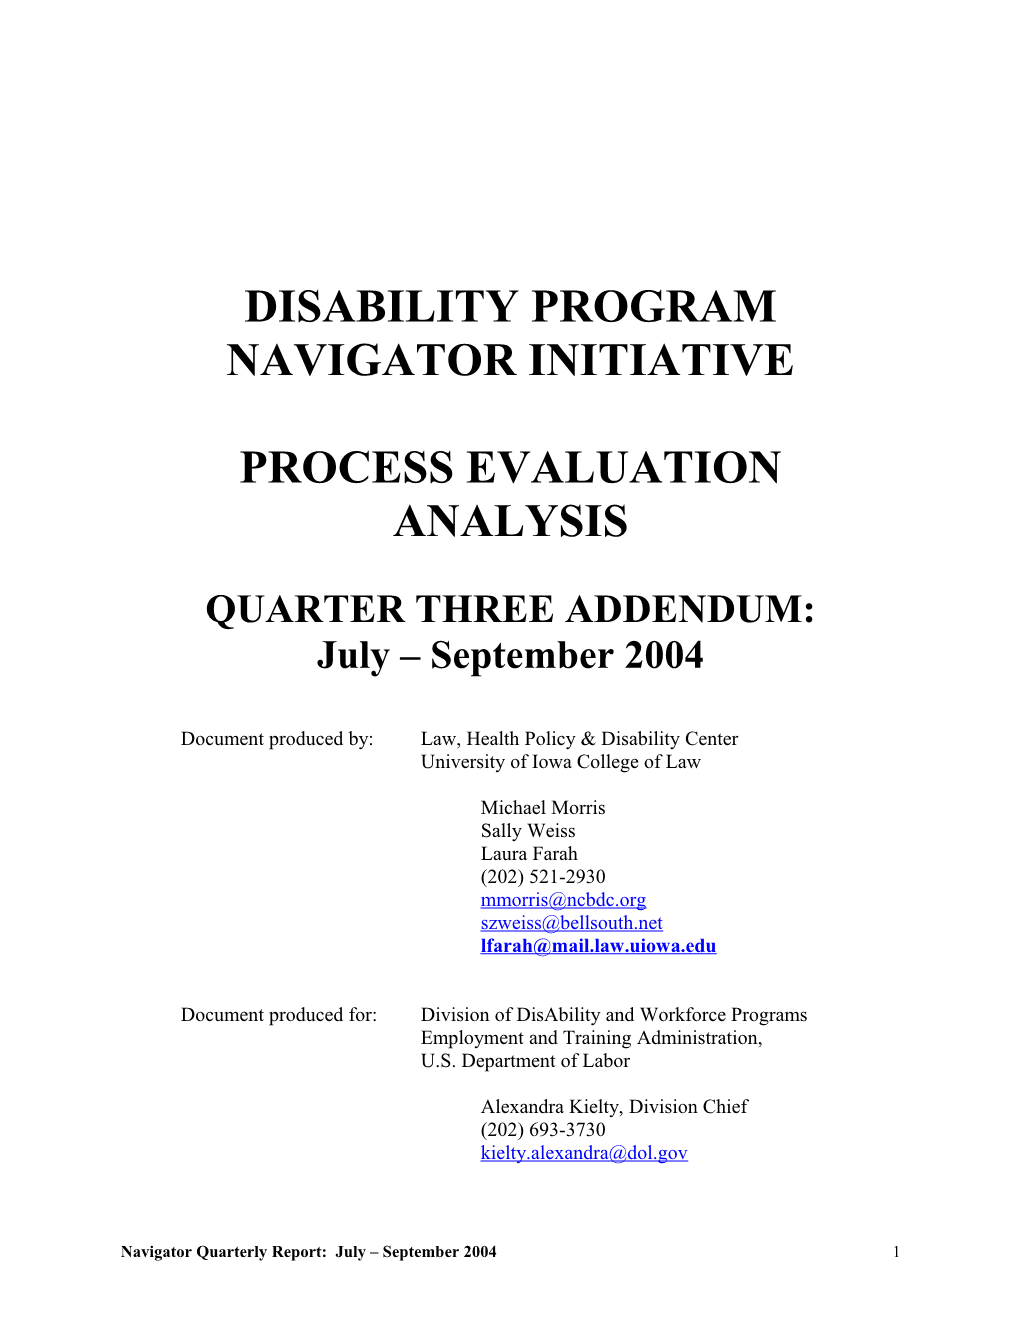 Disability Program Navigator Initiative